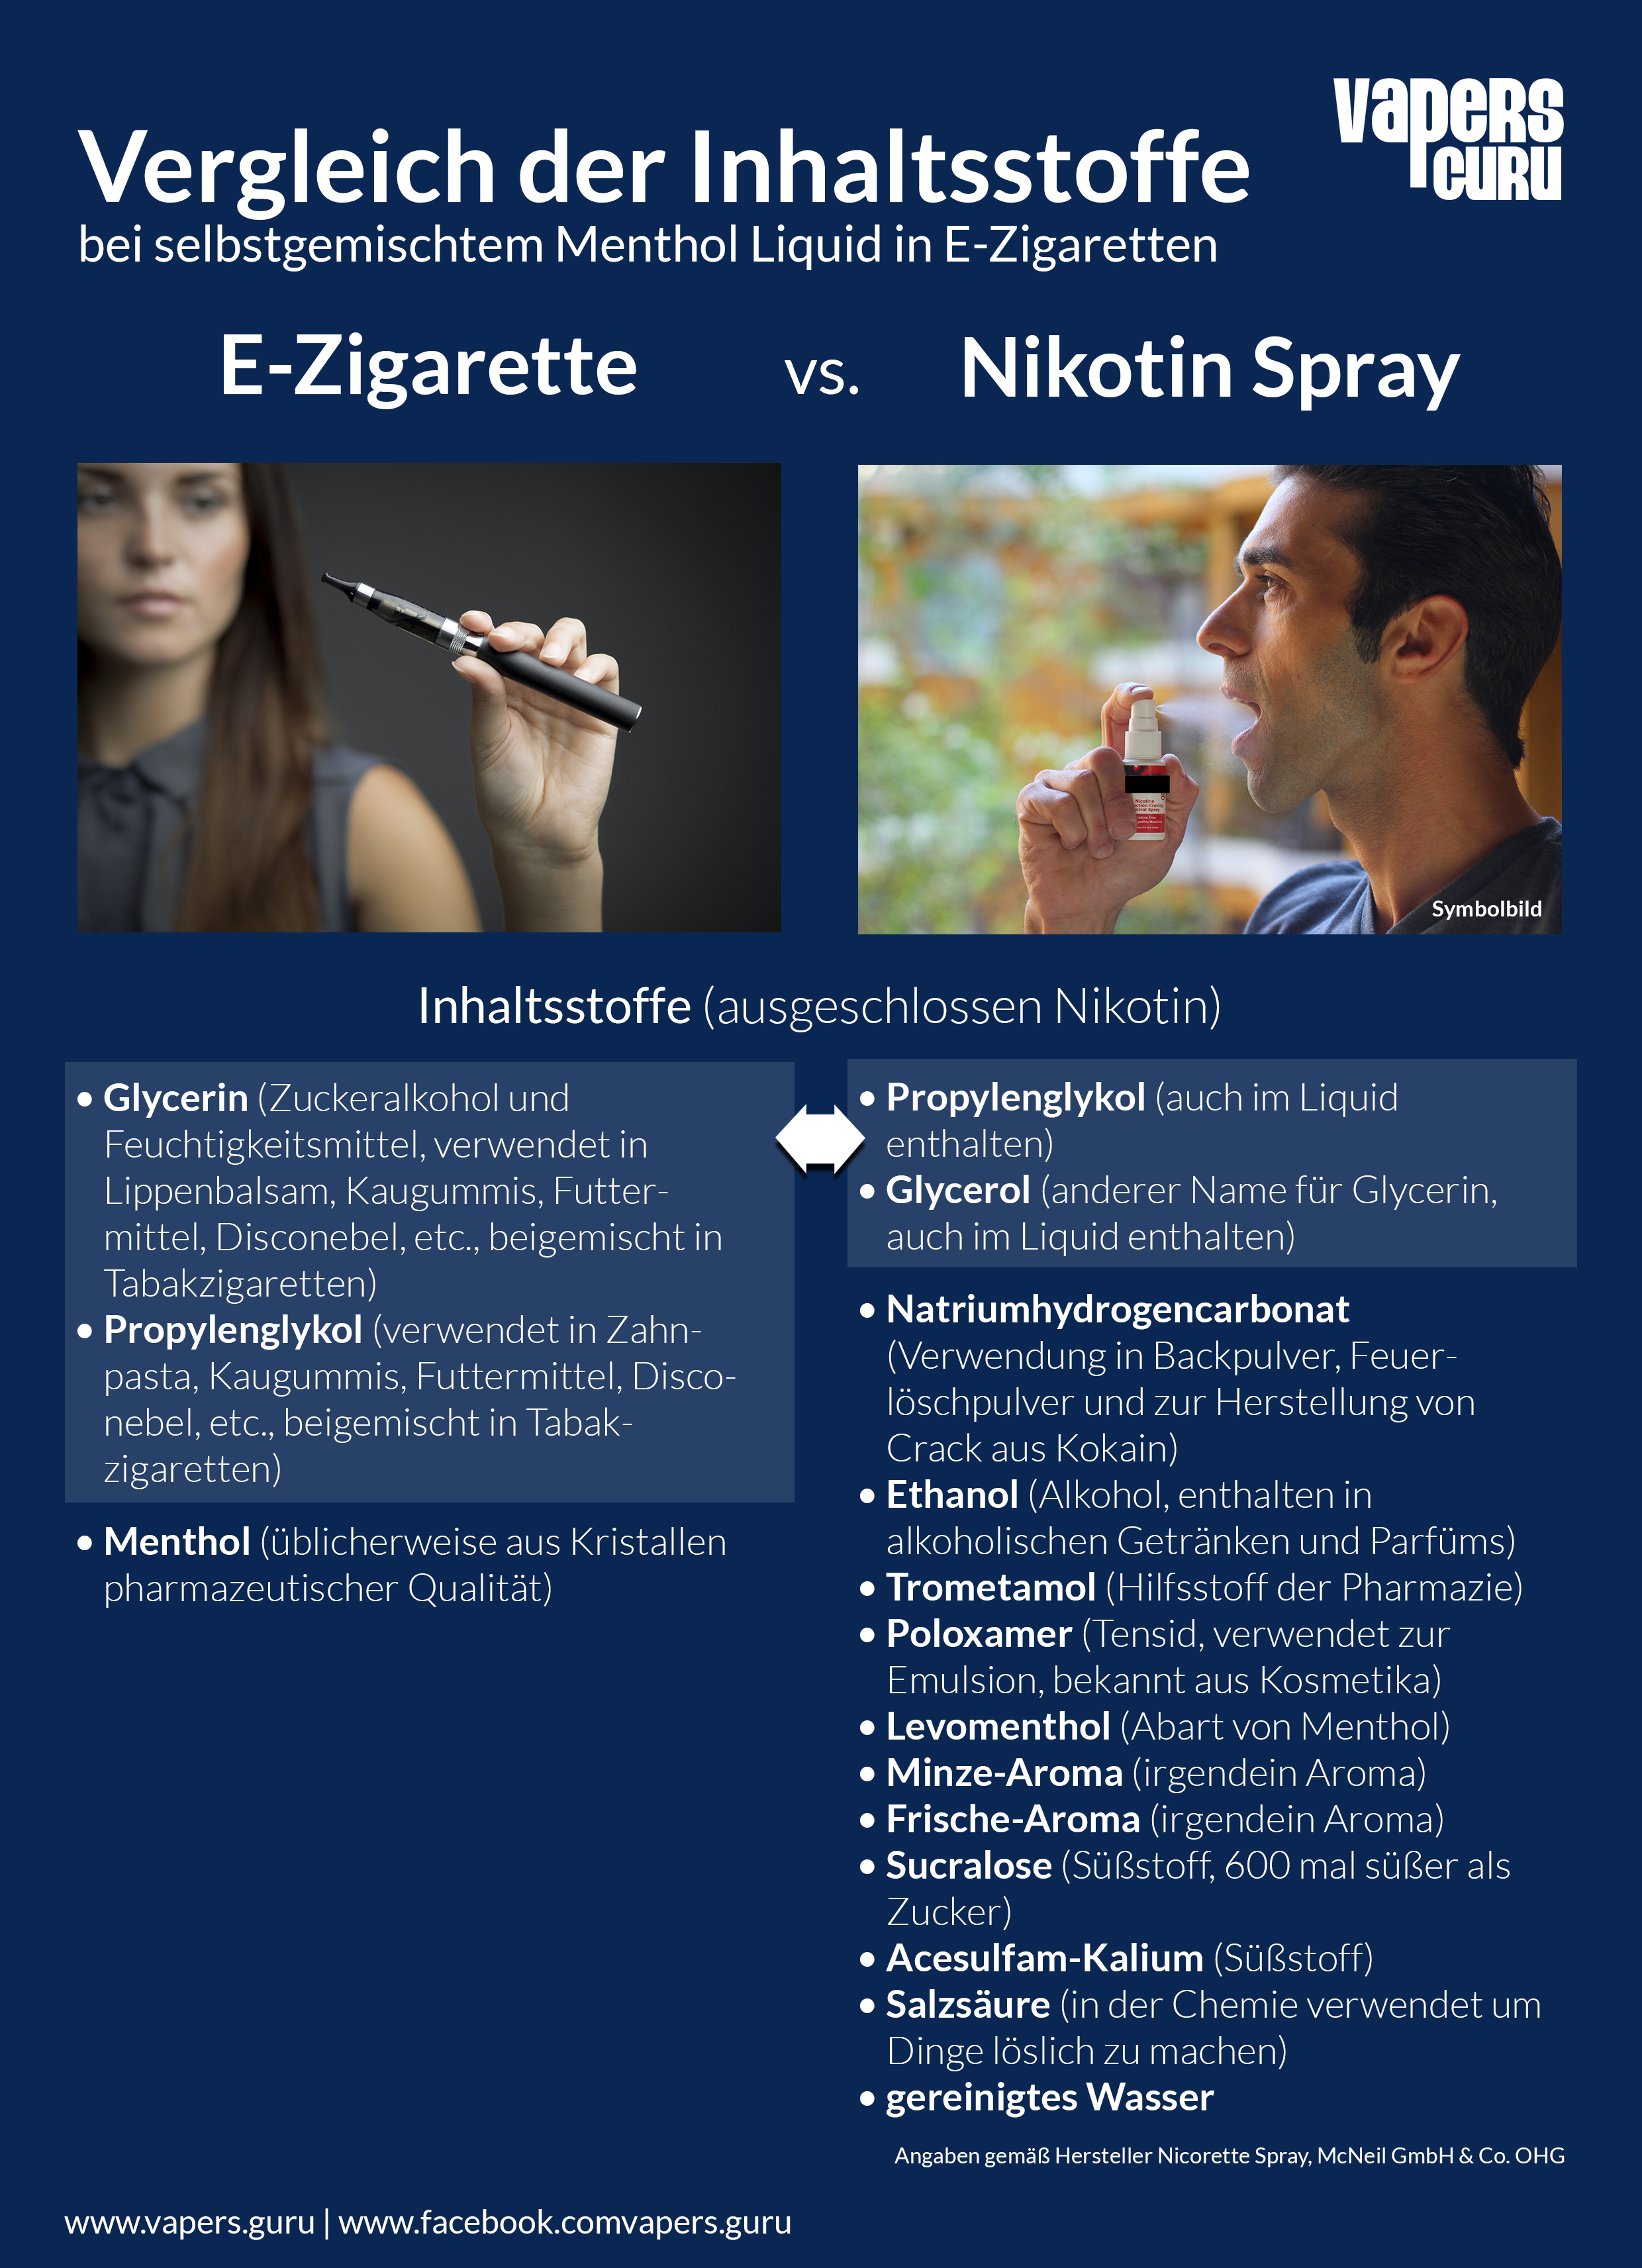 Nikotin Spray vs. E-Zigarette 